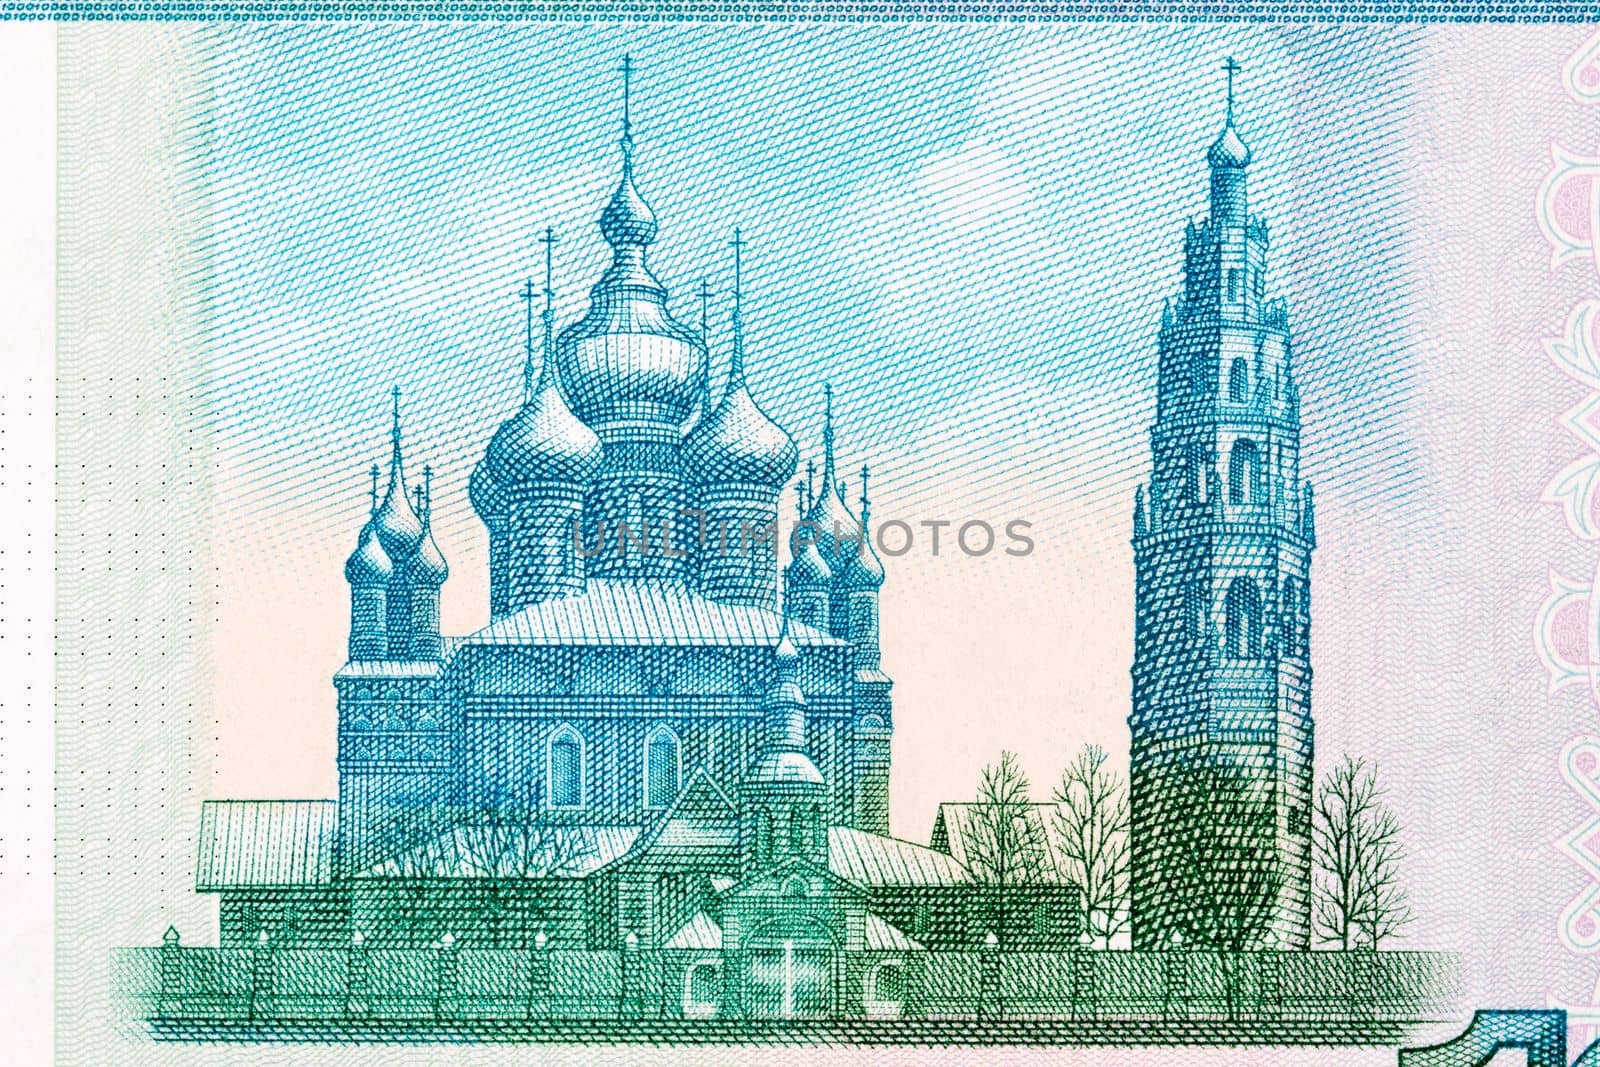 John the Baptist Church from Russian money